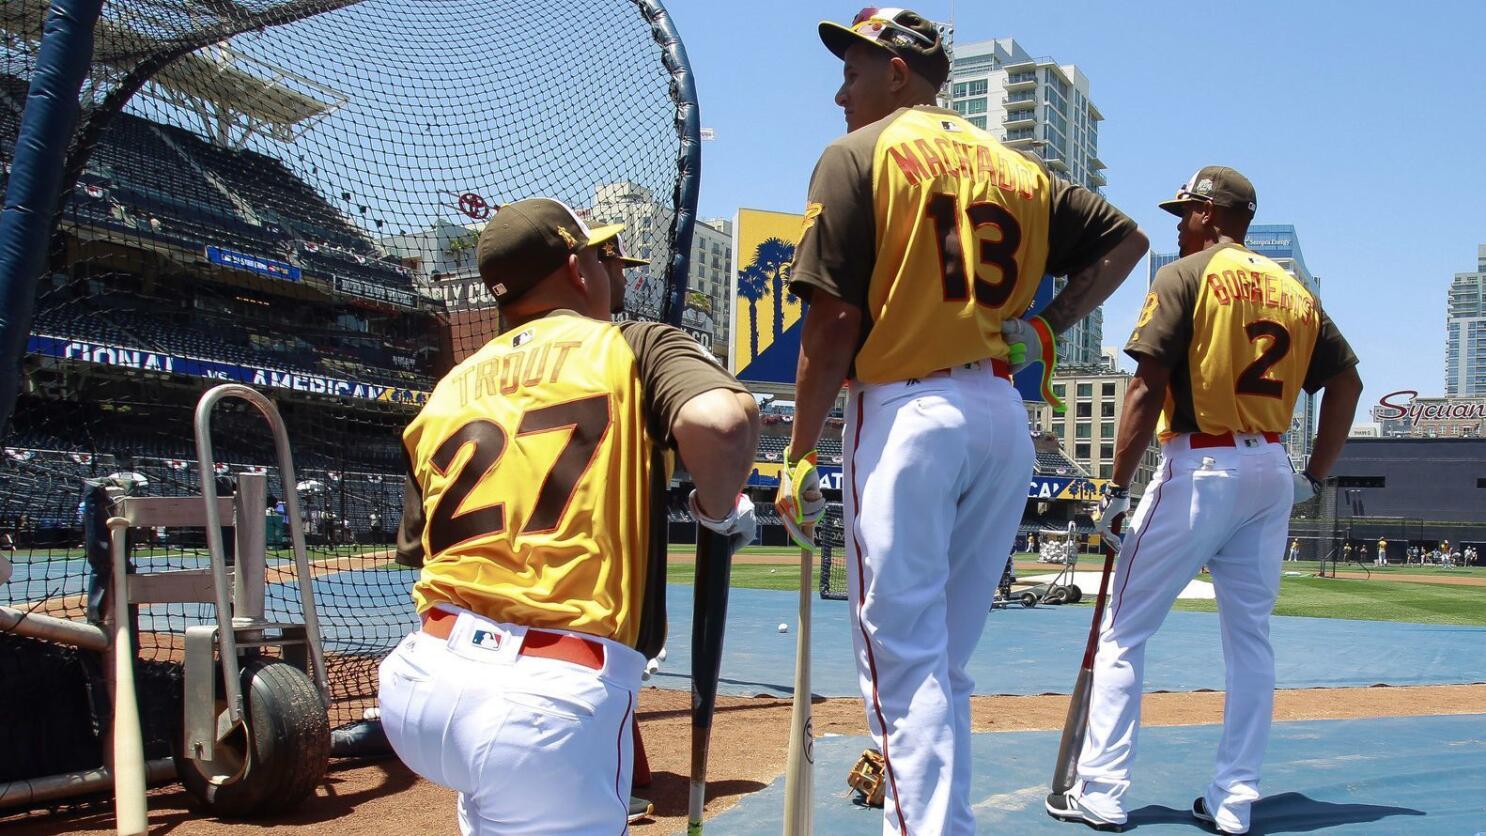 Vintage San Diego Padres T-Shirt, MLB Baseball - Ink In Action